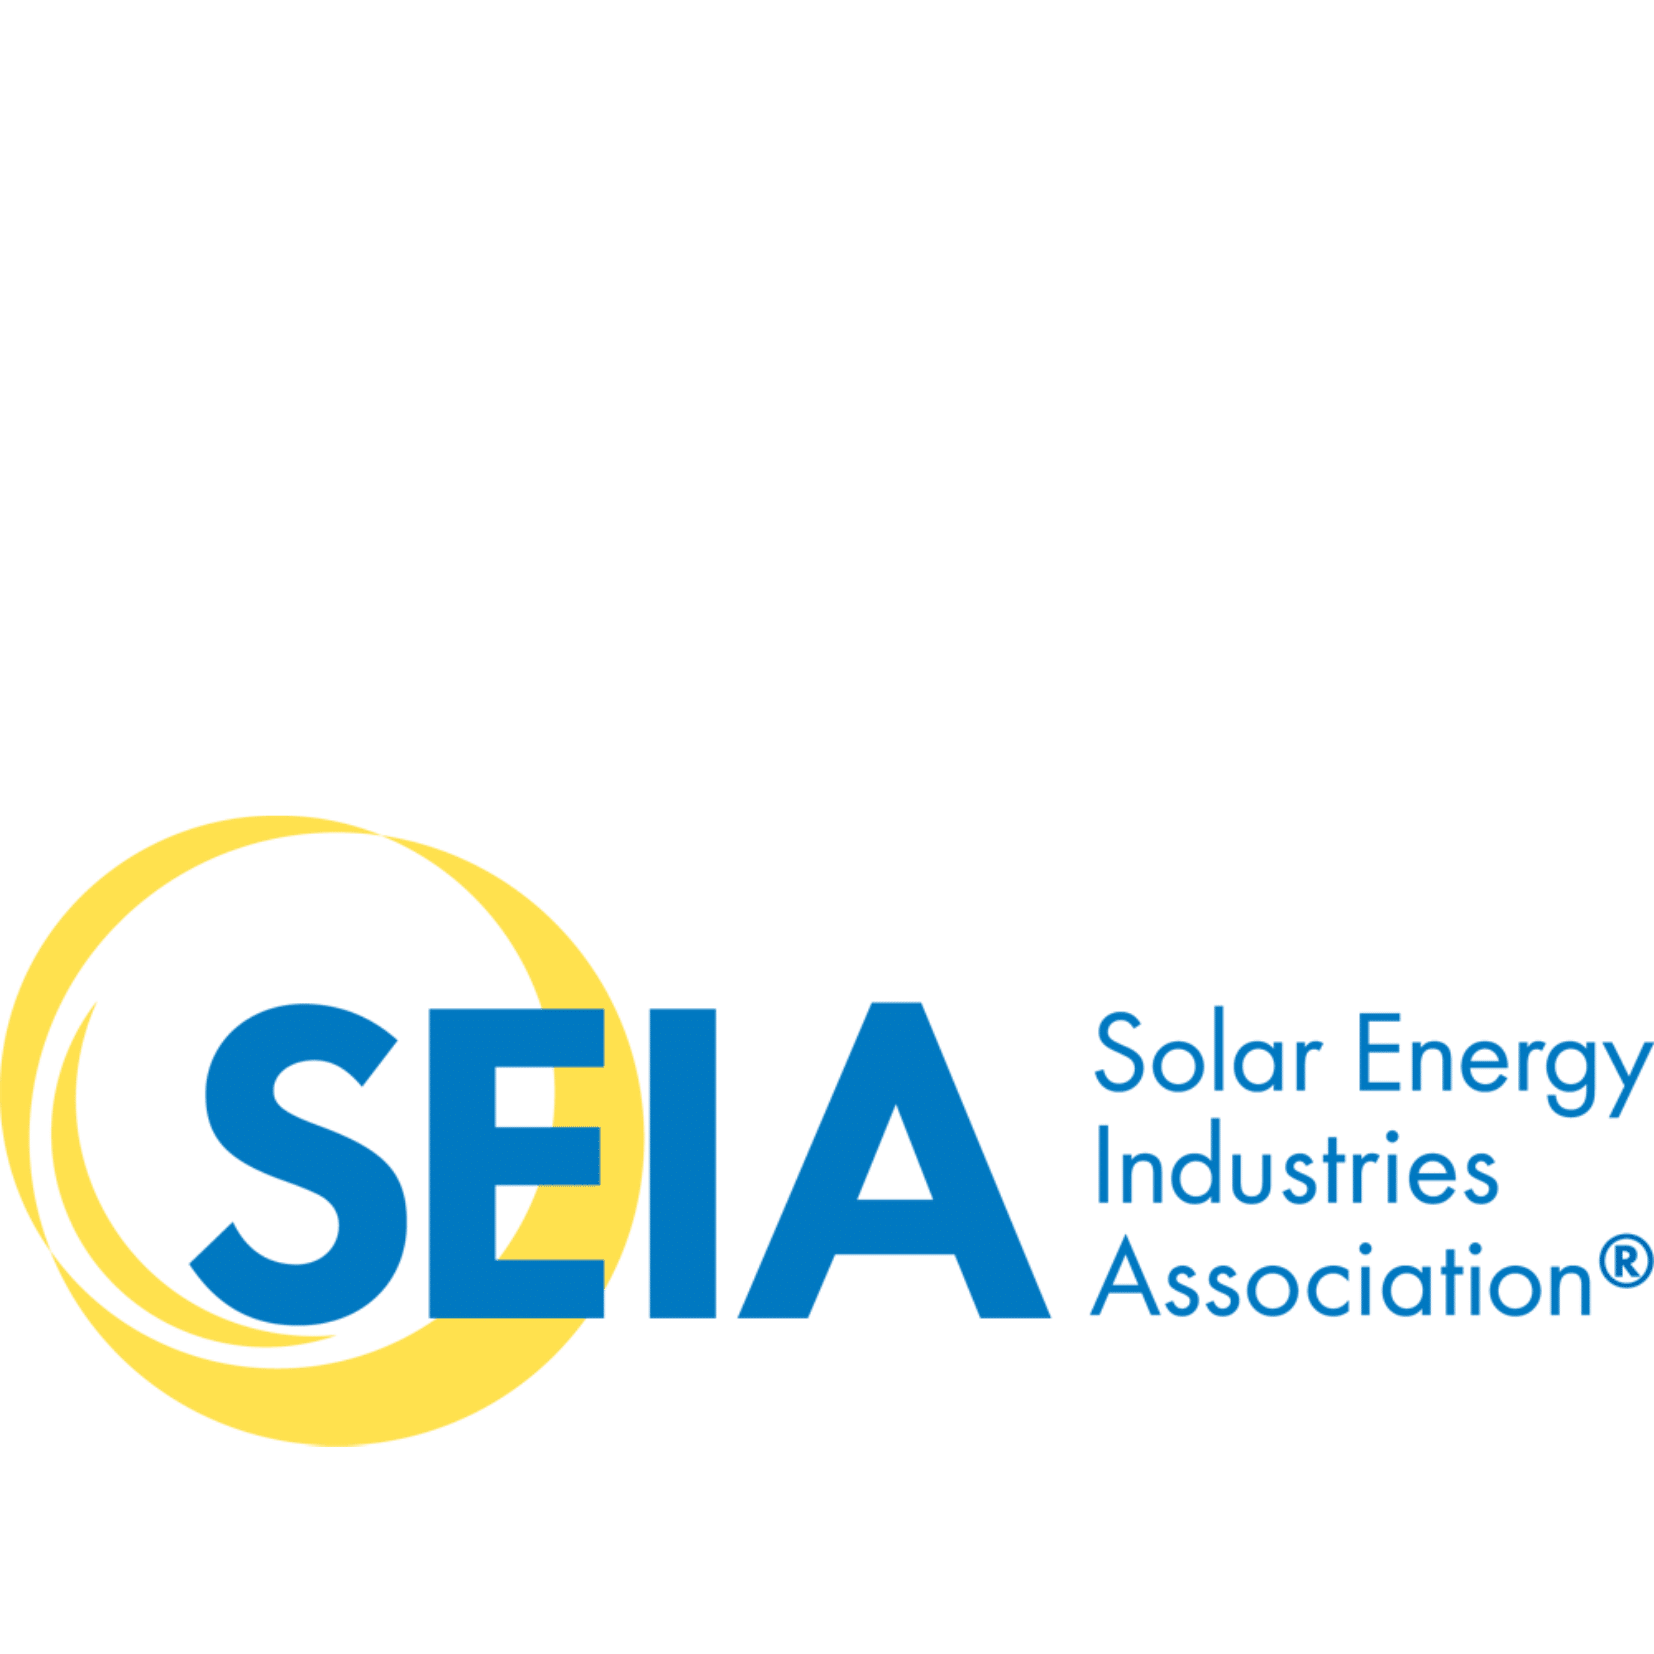 solar energy industries association